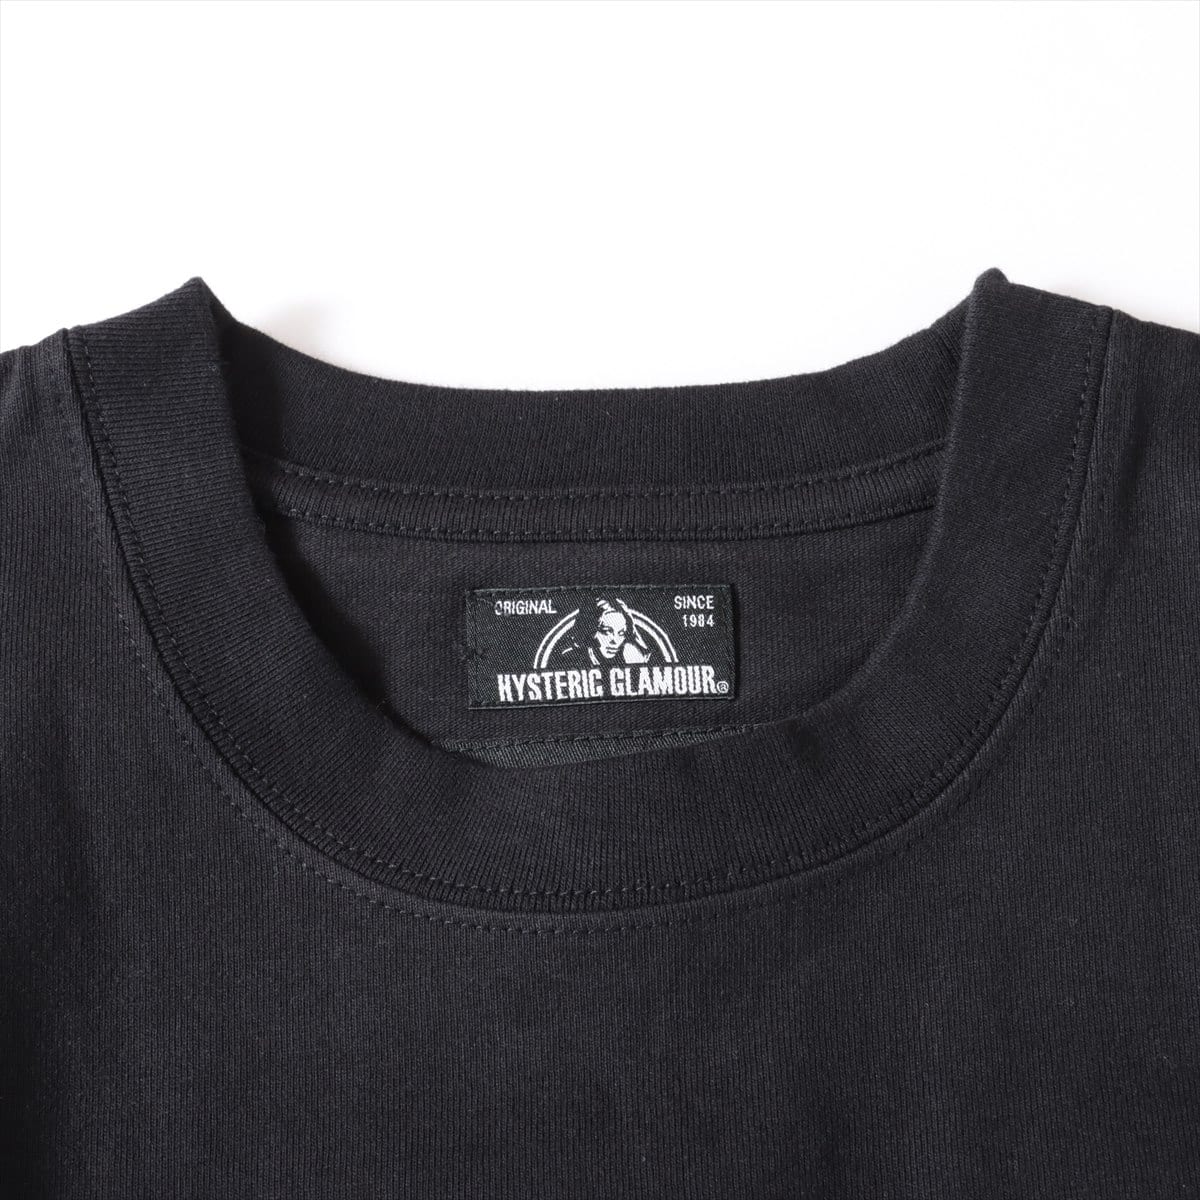 Windancy x Hysteric Glamour 20AW Cotton T-shirt L Men's Black  Logo